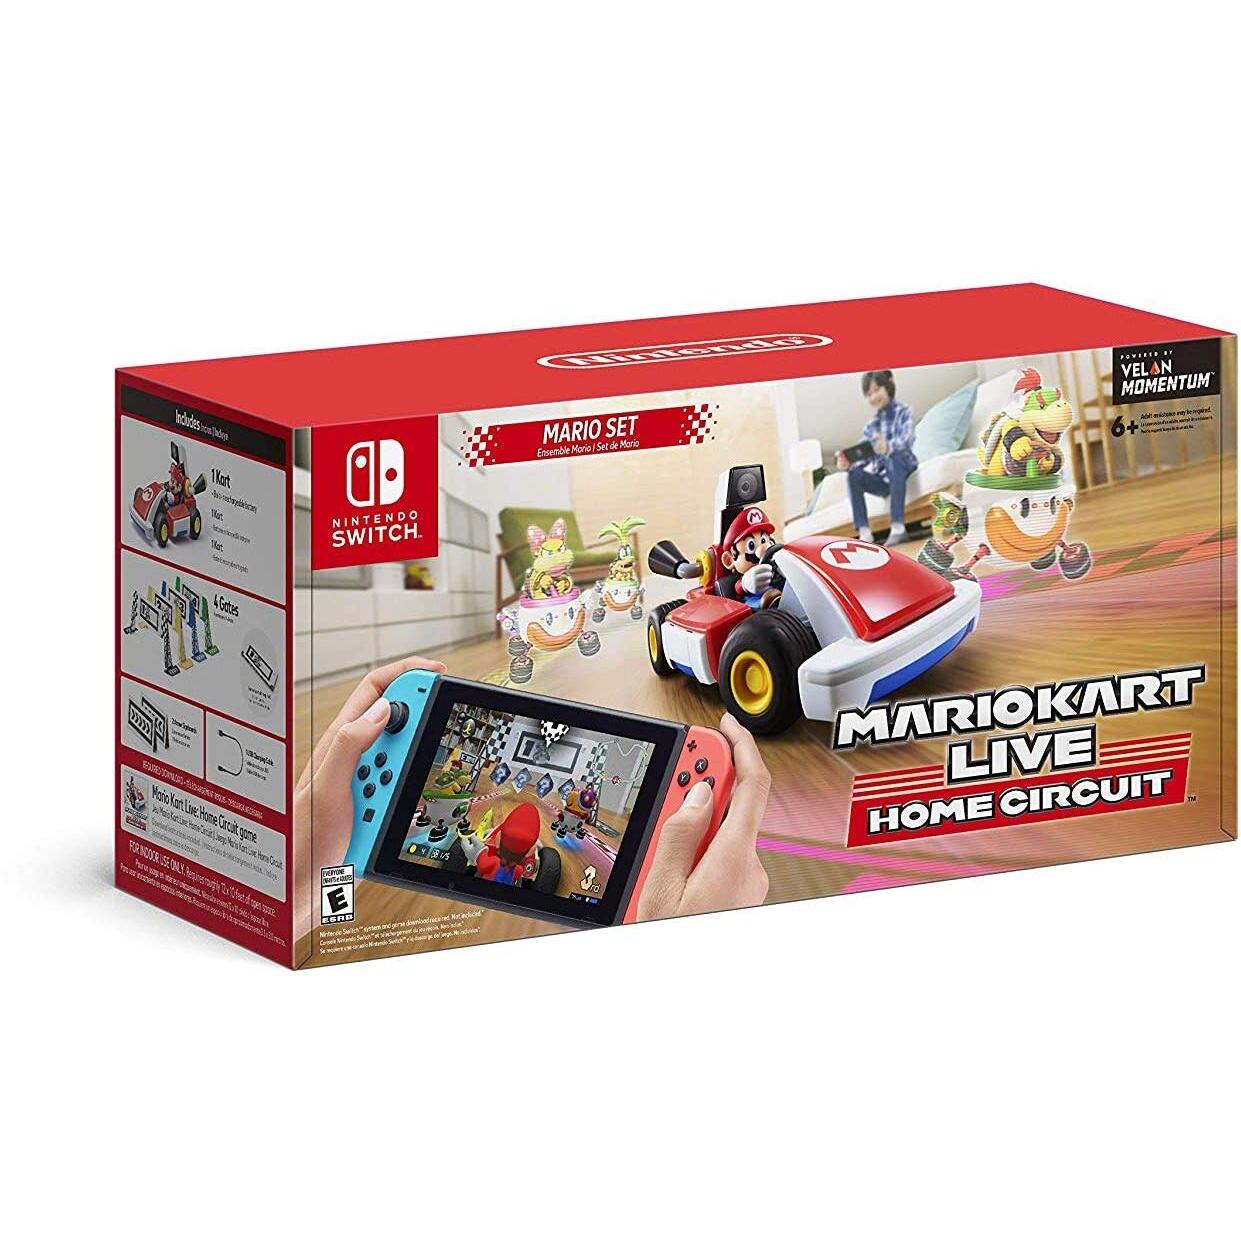 Nintendo - Mario Kart Live: Home Circuit - Mario Set